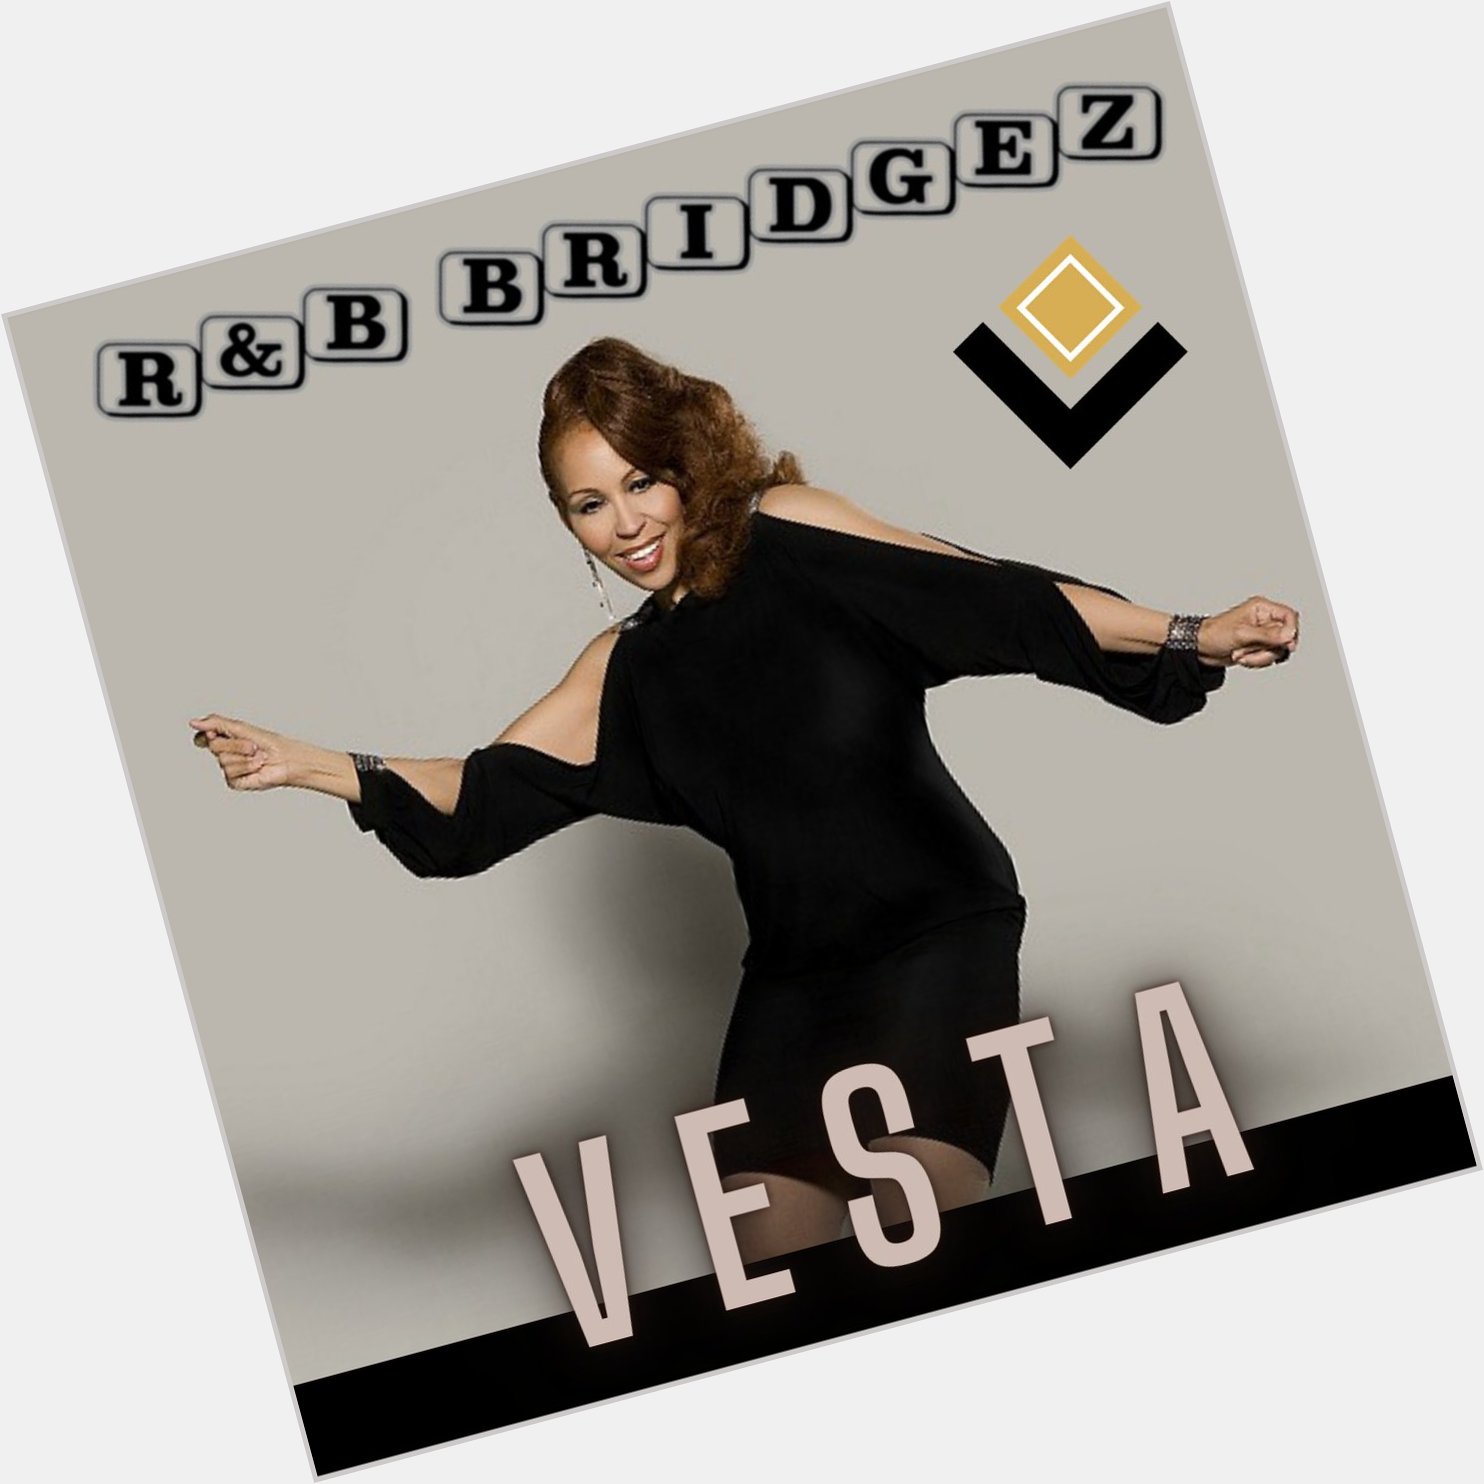 Happy Birthday Vesta - R&B Bridgez: The Life and Music of Vesta | Shanice Contributes
 